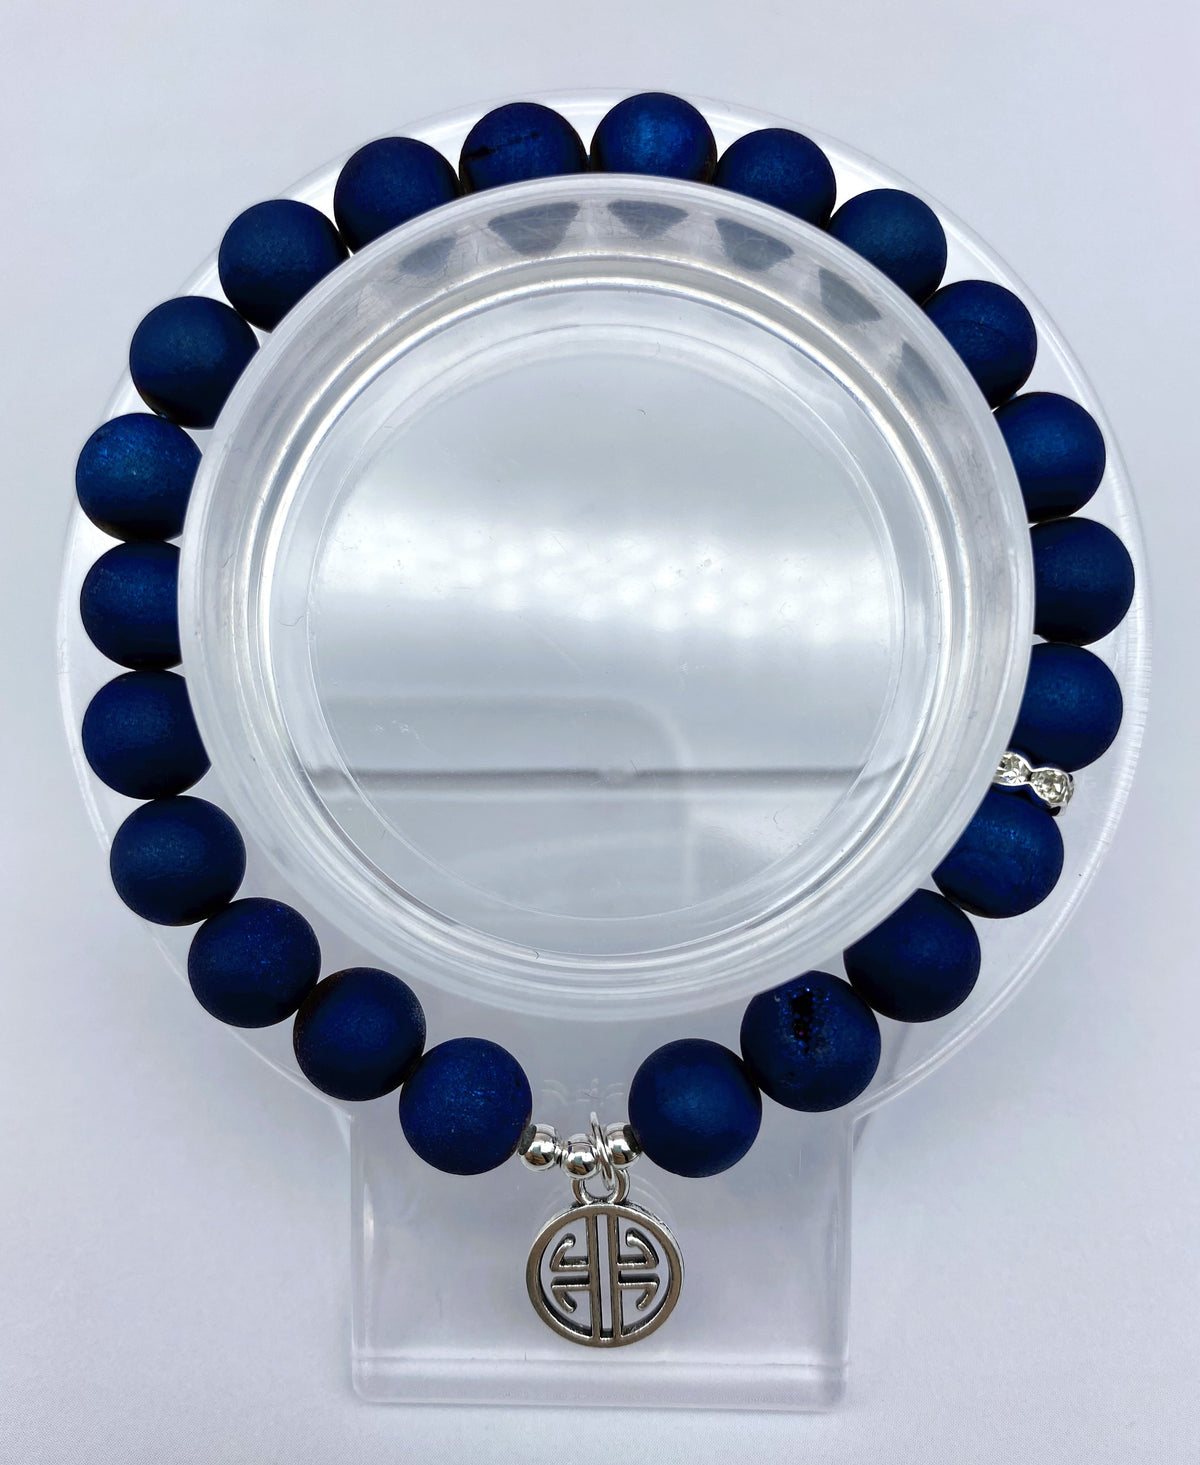 Unique Design 8mm 10mm Druzy Agate Bracelet Collection Gemstone Round Beads Stretch Bracelet 7.5 Inch Unisex